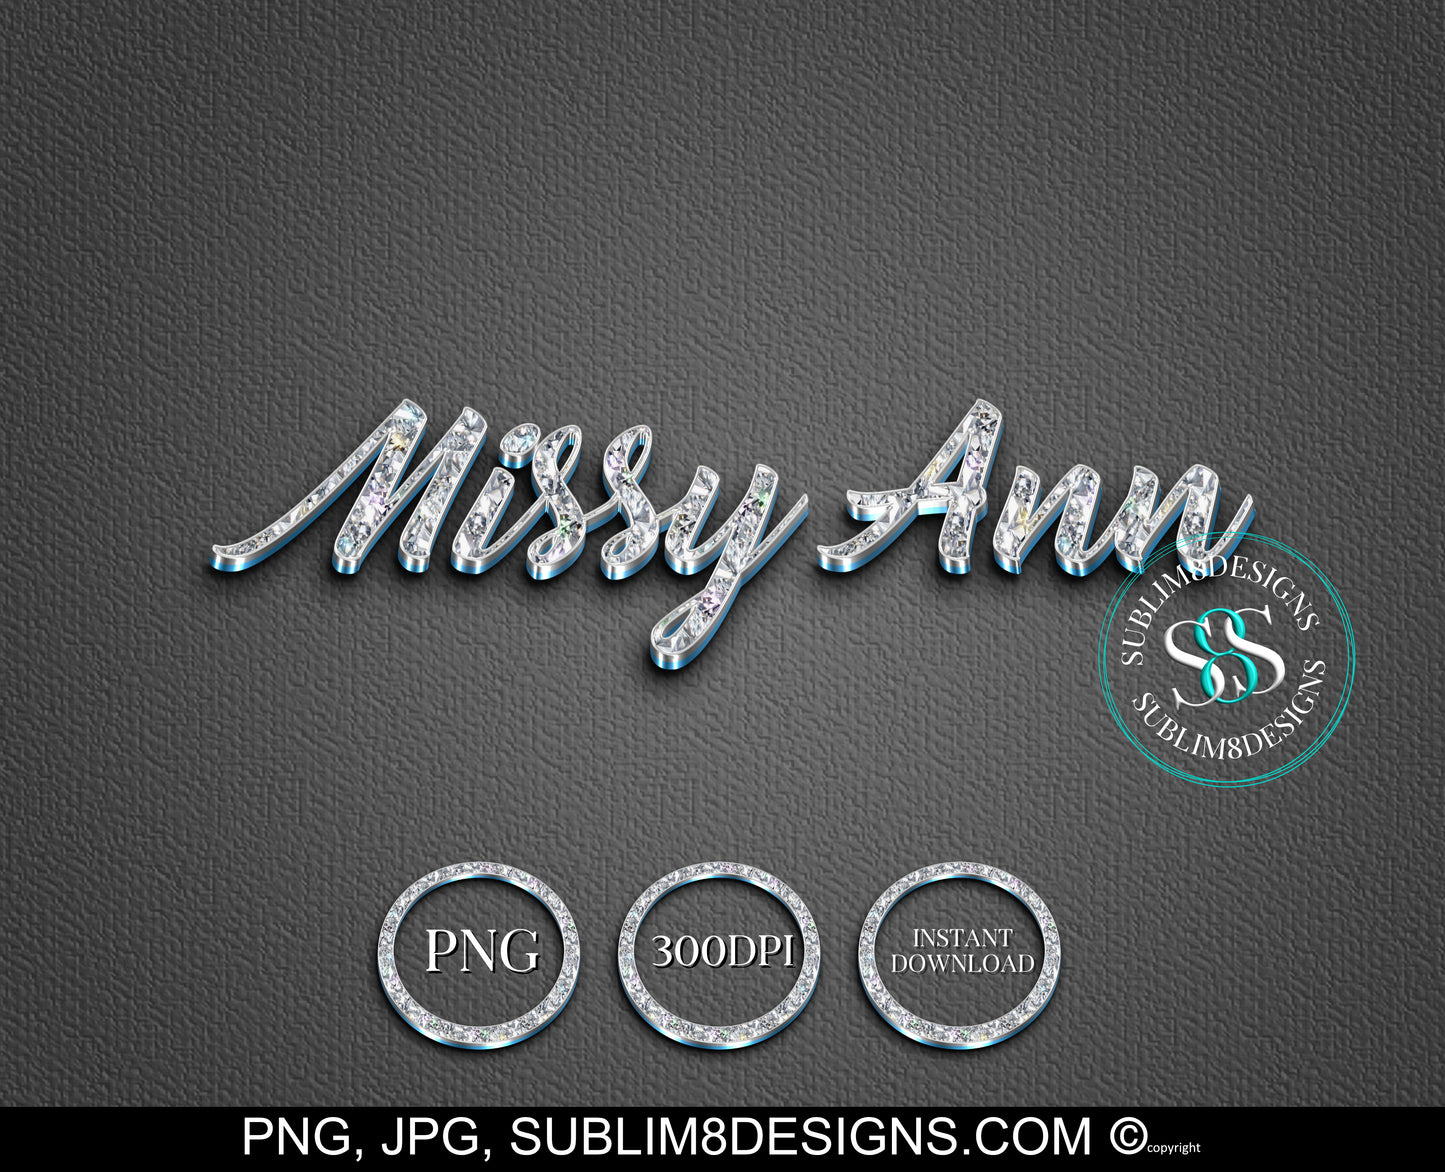 Missy Ann Diamond Font